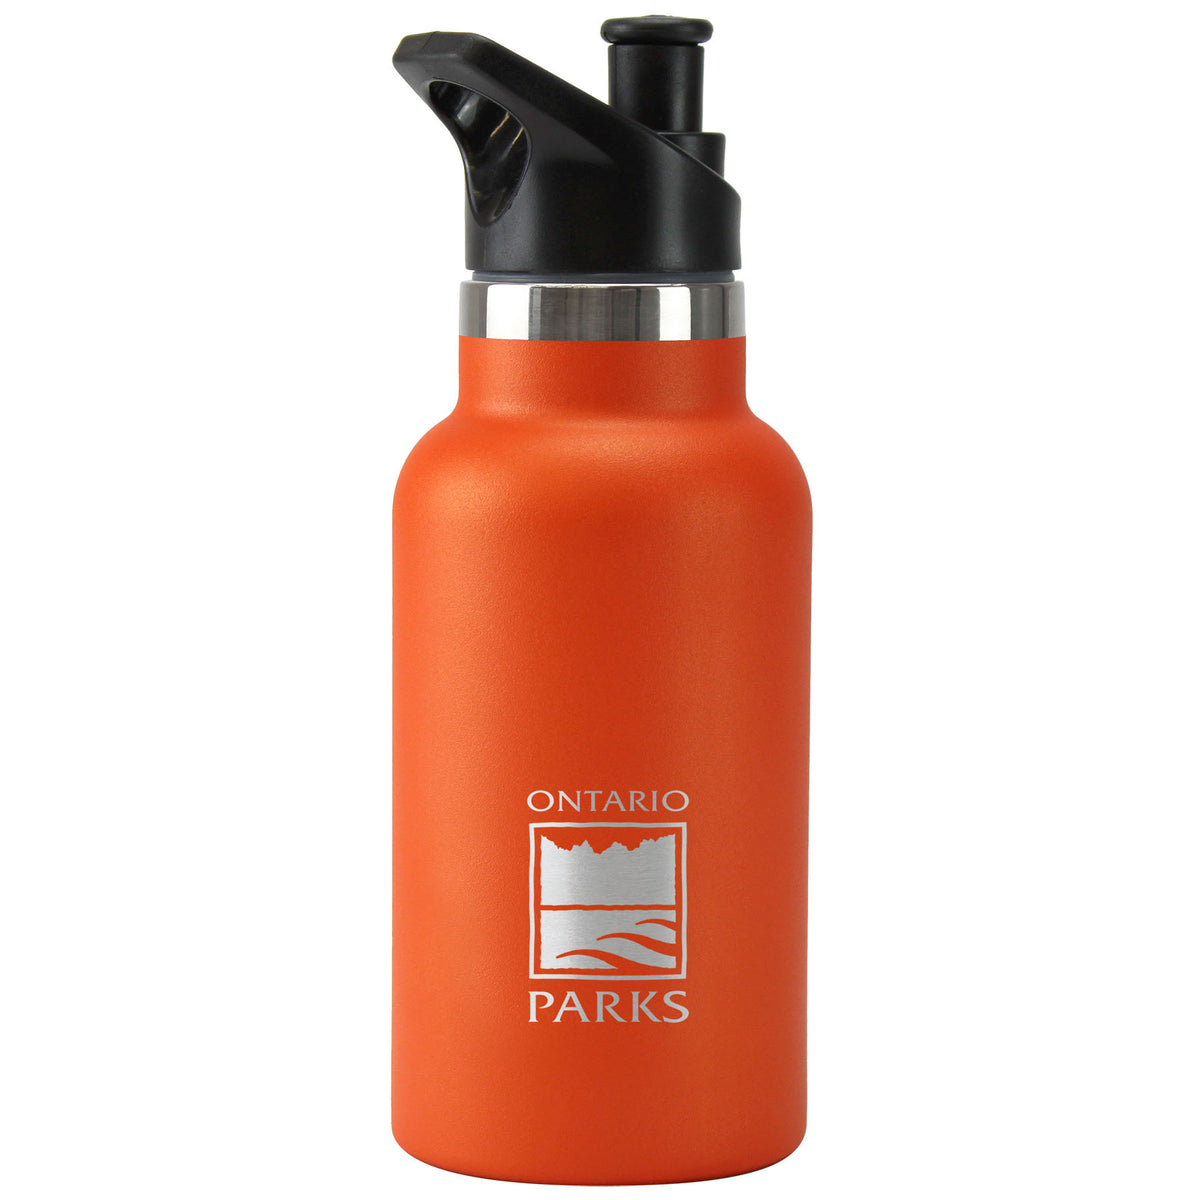 Orange (Colour Blaze Orange) 14 oz Water bottle. Etched Ontario Parks logo on front. Black sport nozzle for top.